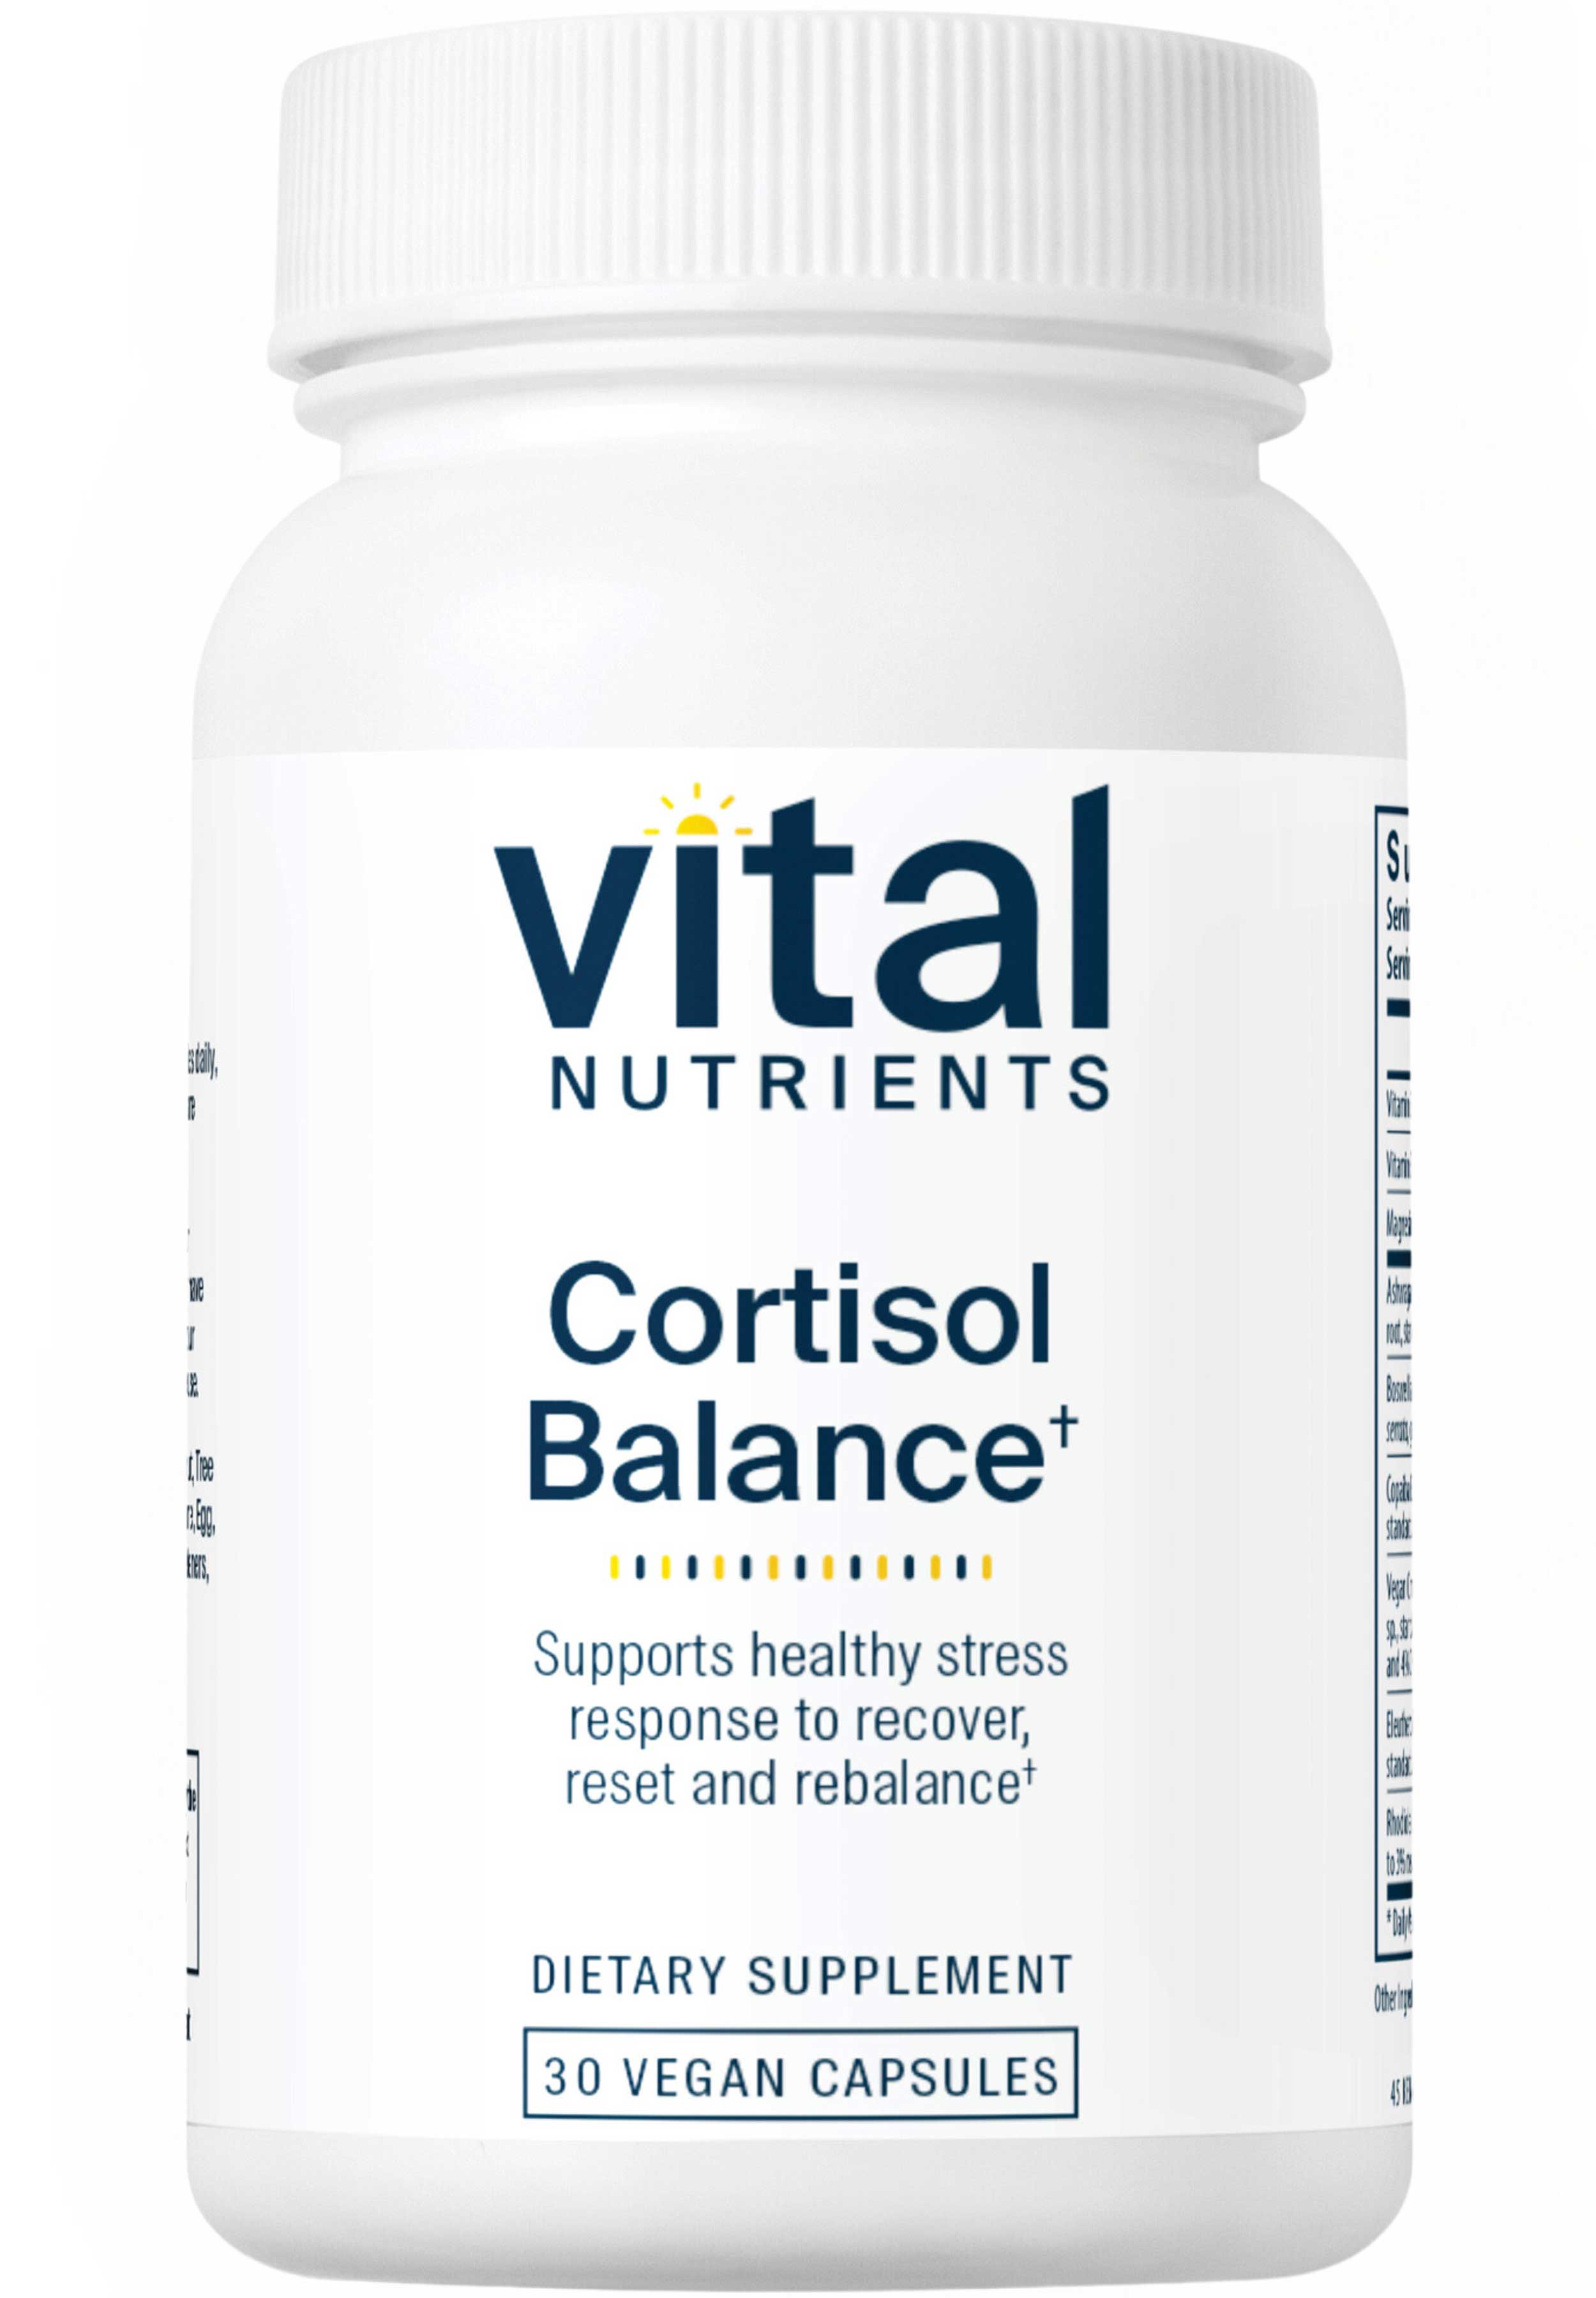 Vital Nutrients Cortisol Balance